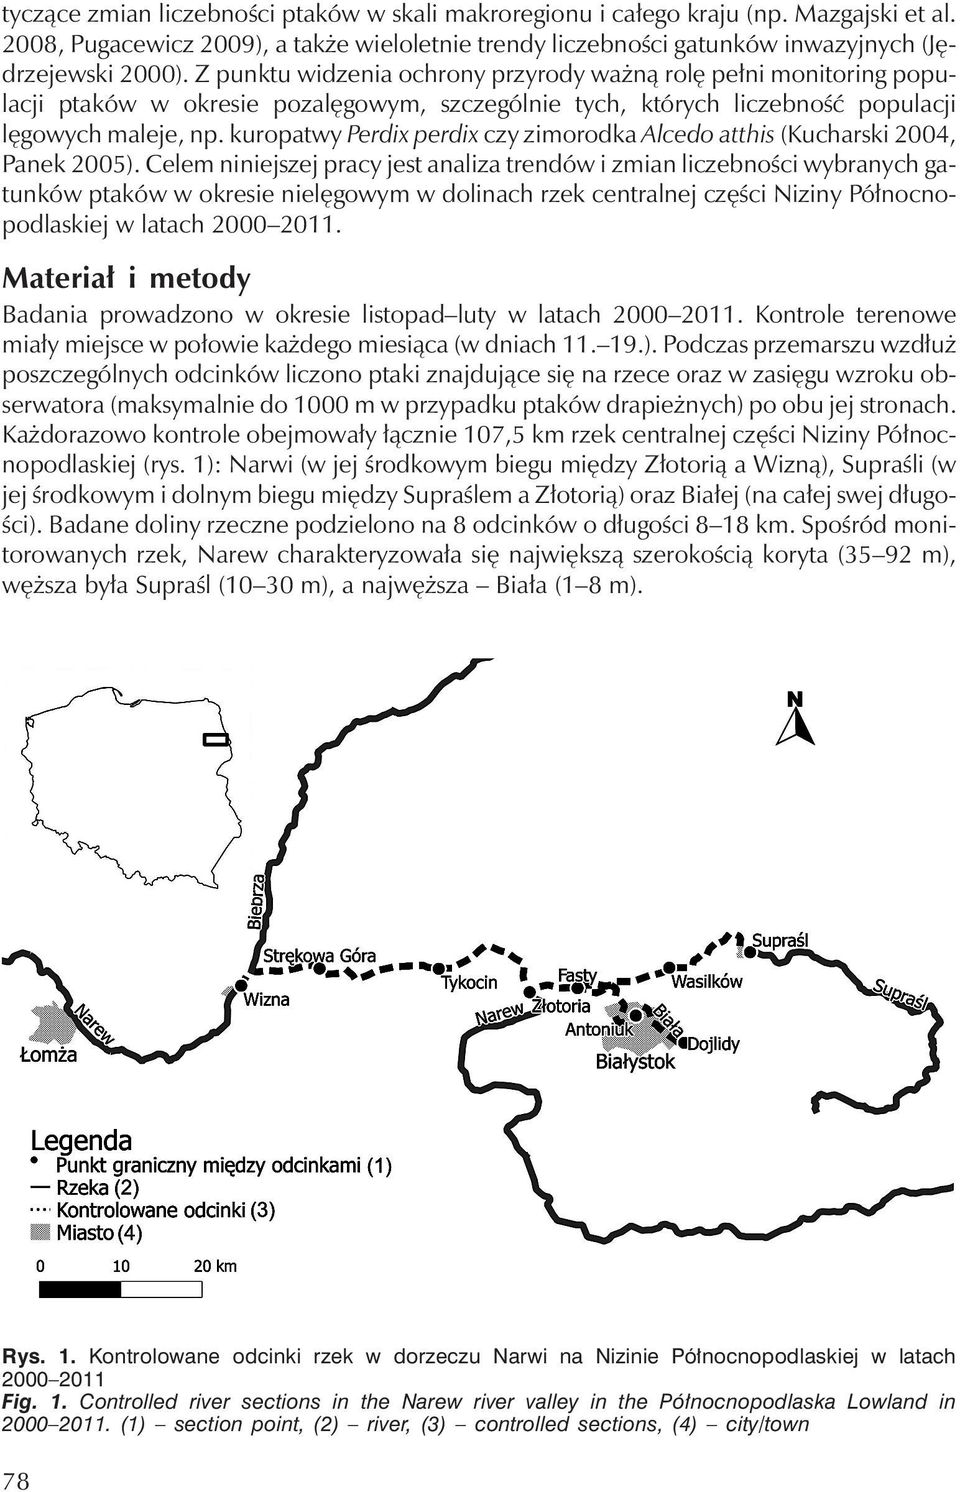 kuropatwy Perdix perdix czy zimorodka Alcedo atthis (Kucharski 2004, Panek 2005).